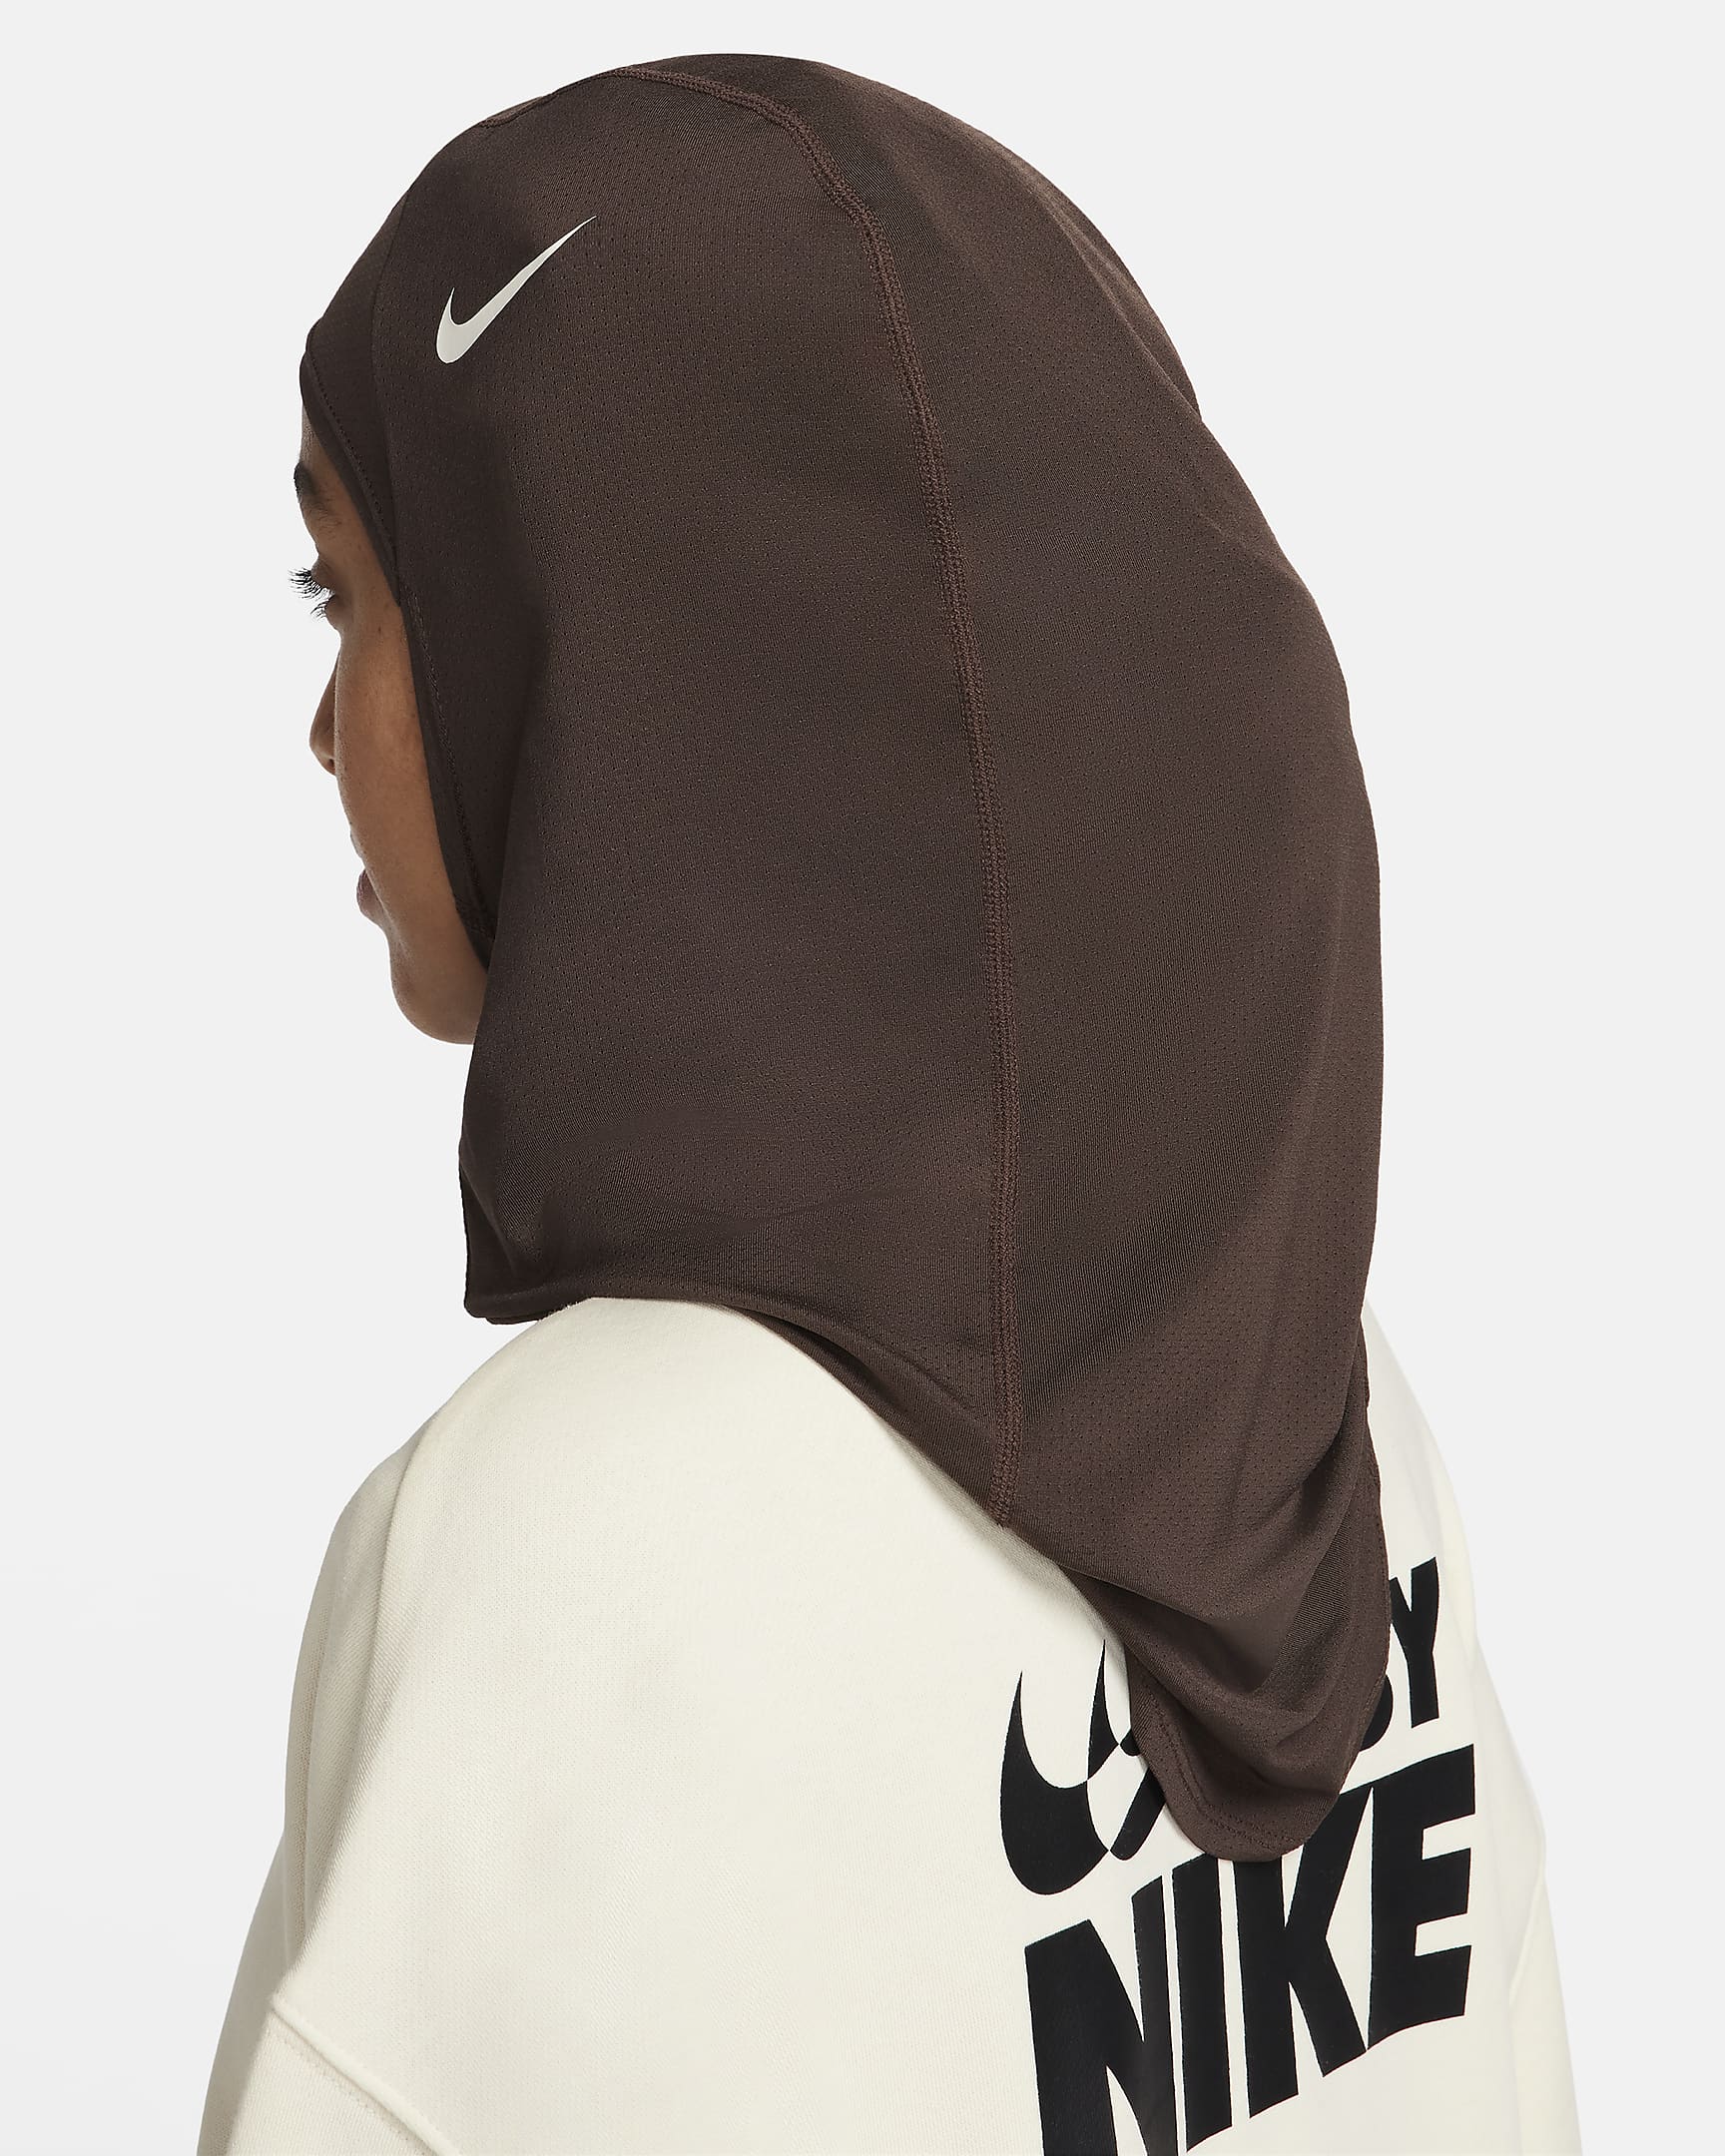 Nike Pro Hijab 2.0 - Baroque Brown/Sail